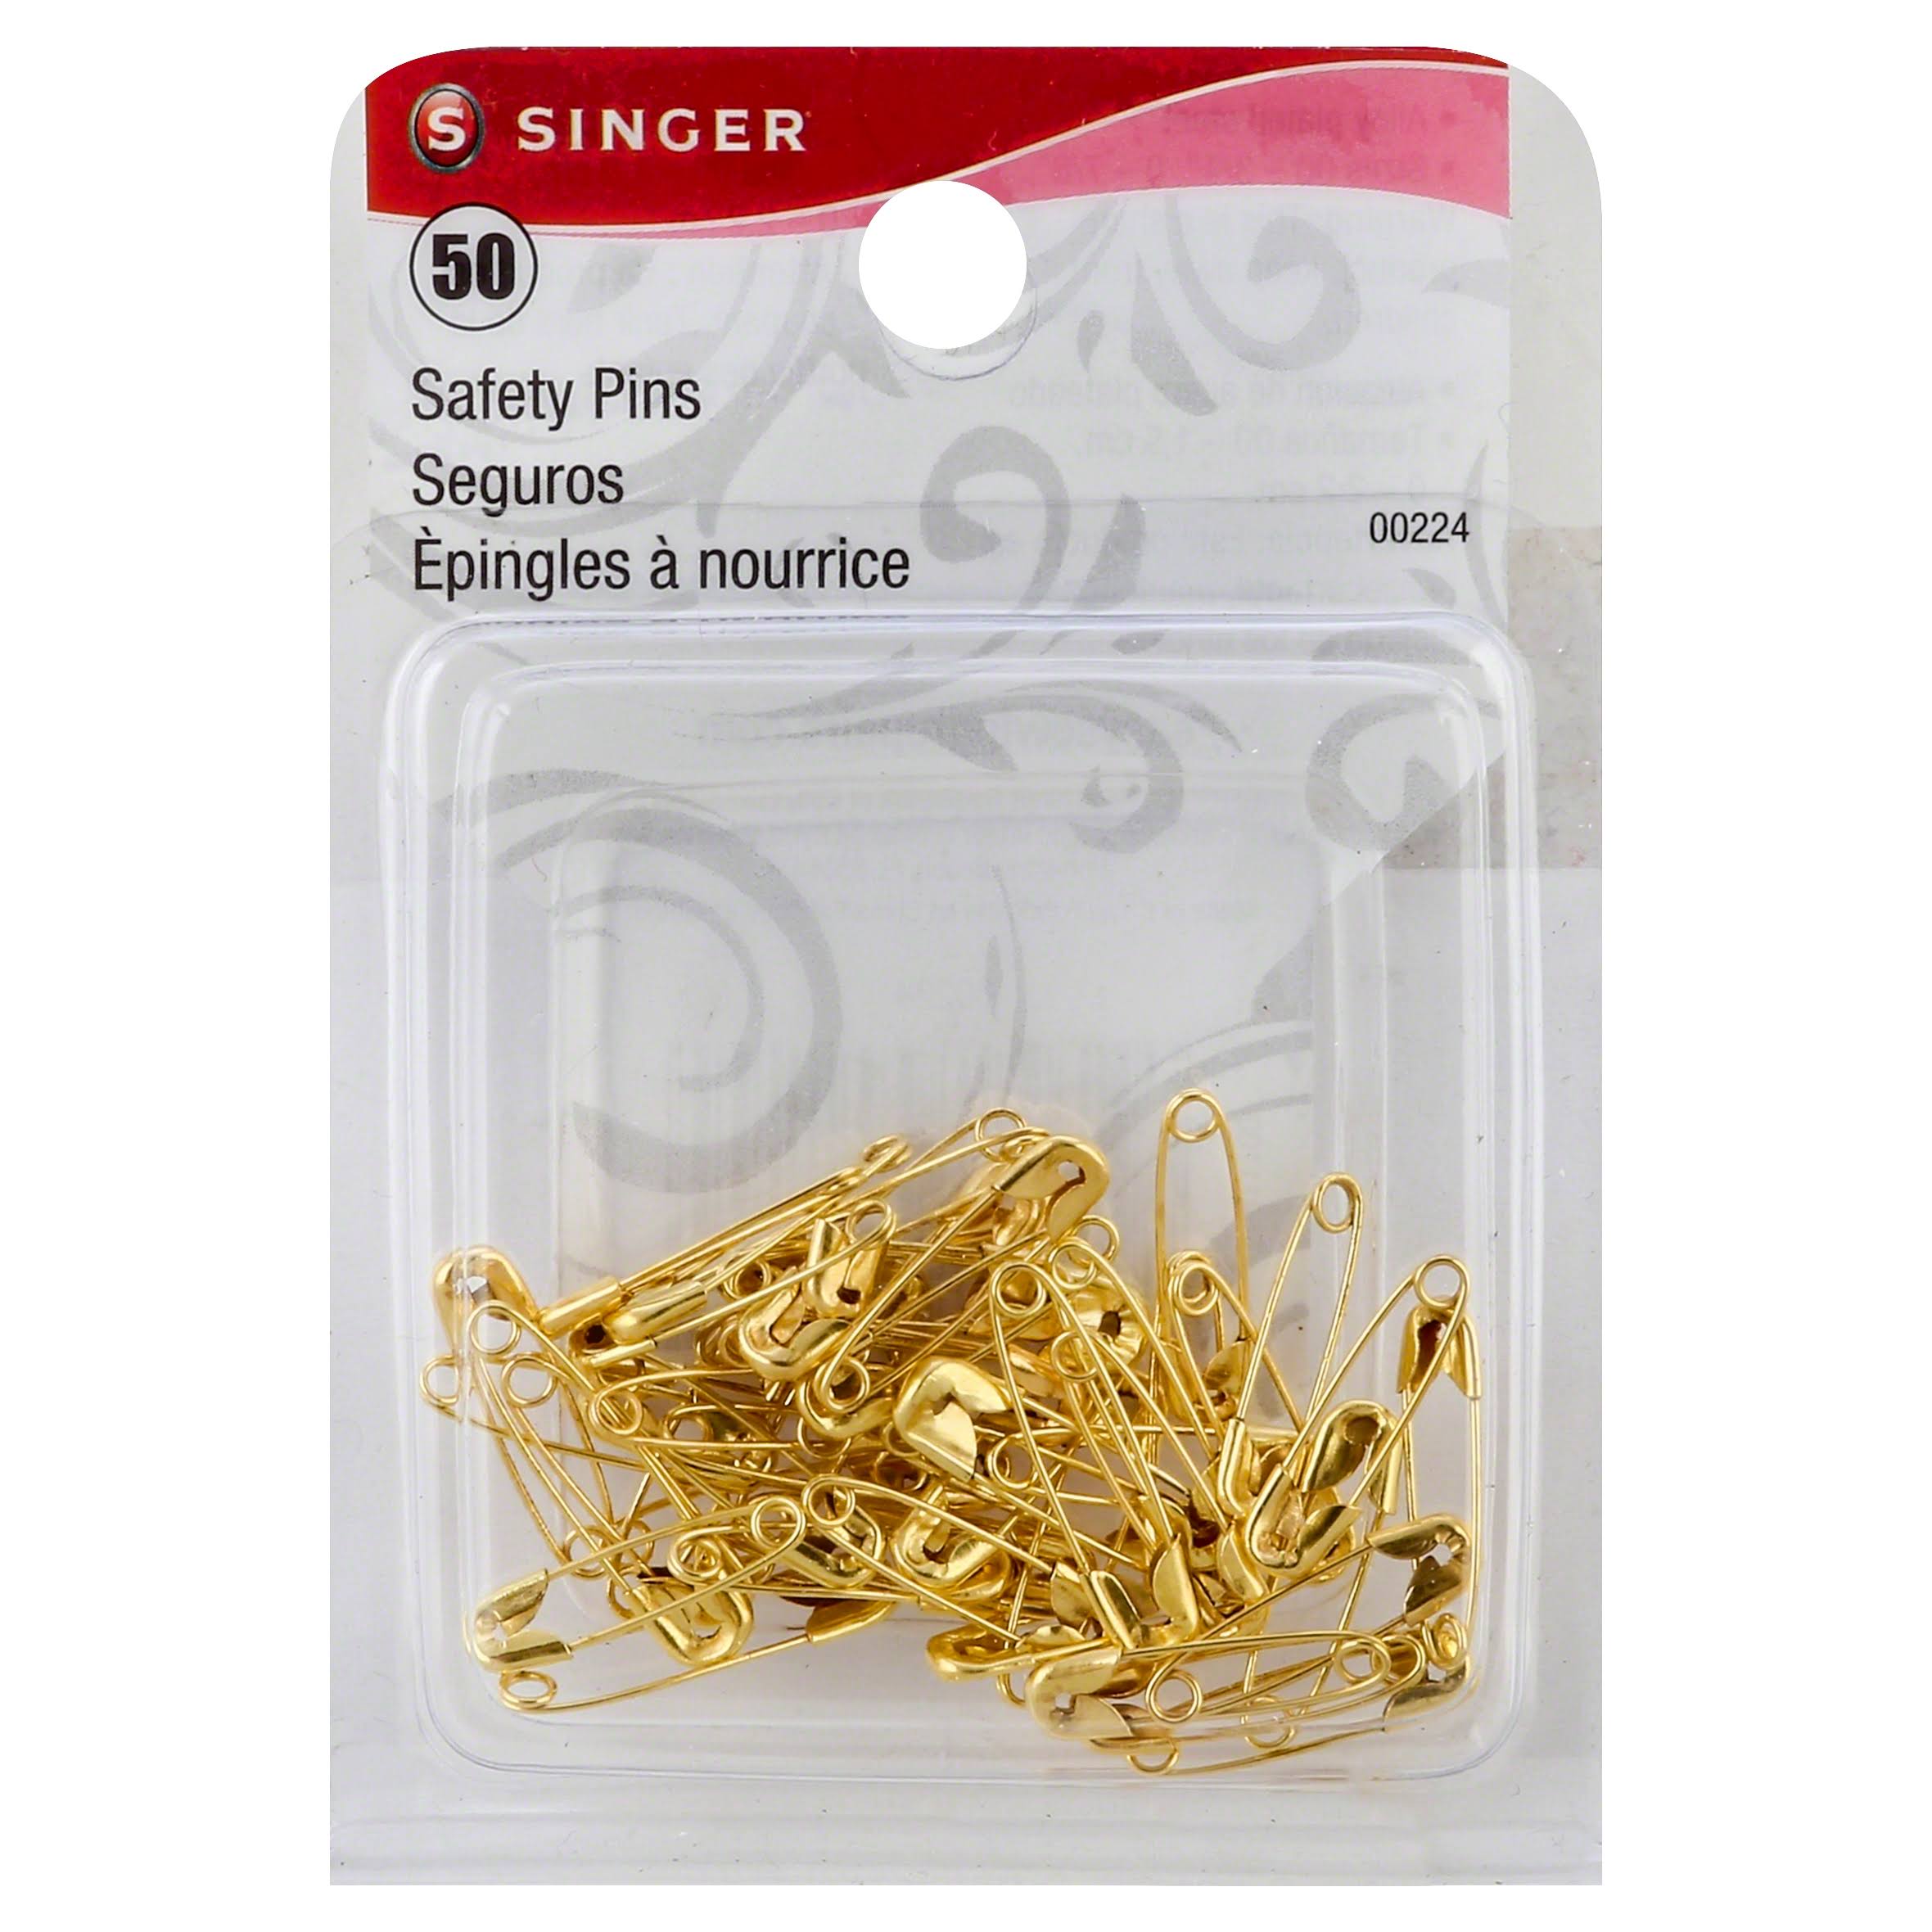 Singer Safety Pins - 50ct